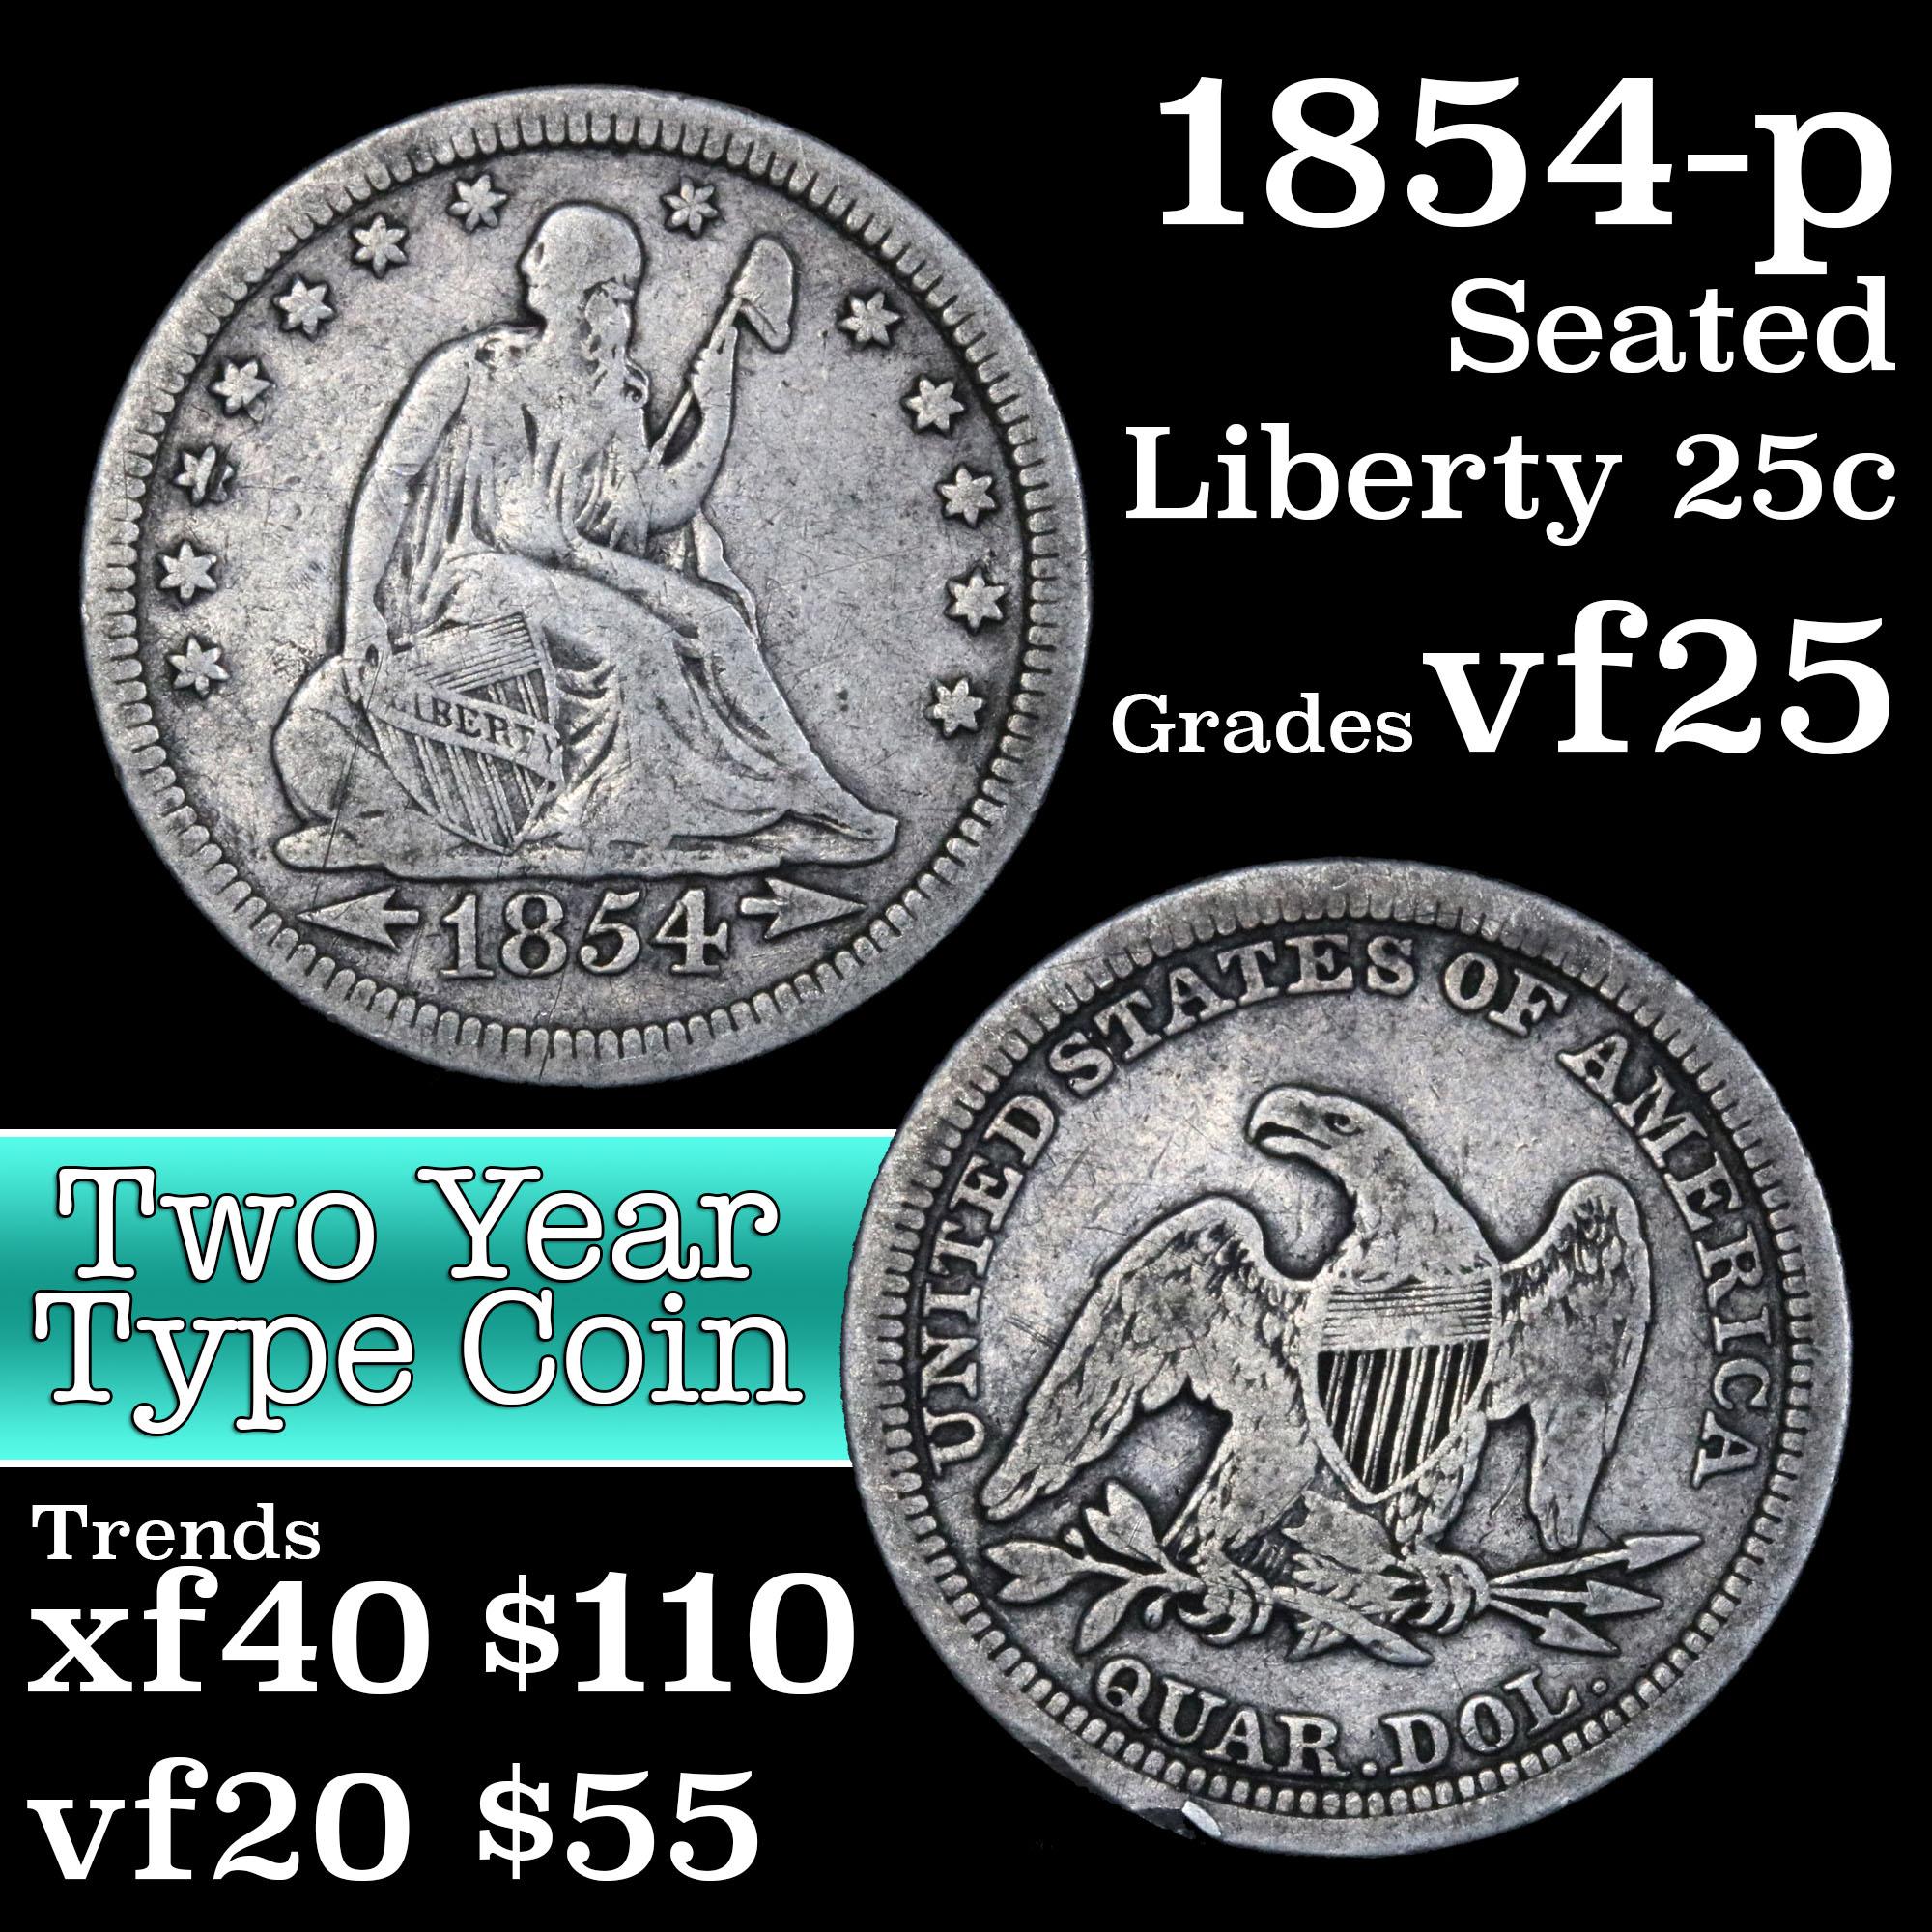 1854-p Seated Liberty Quarter 25c Grades vf+